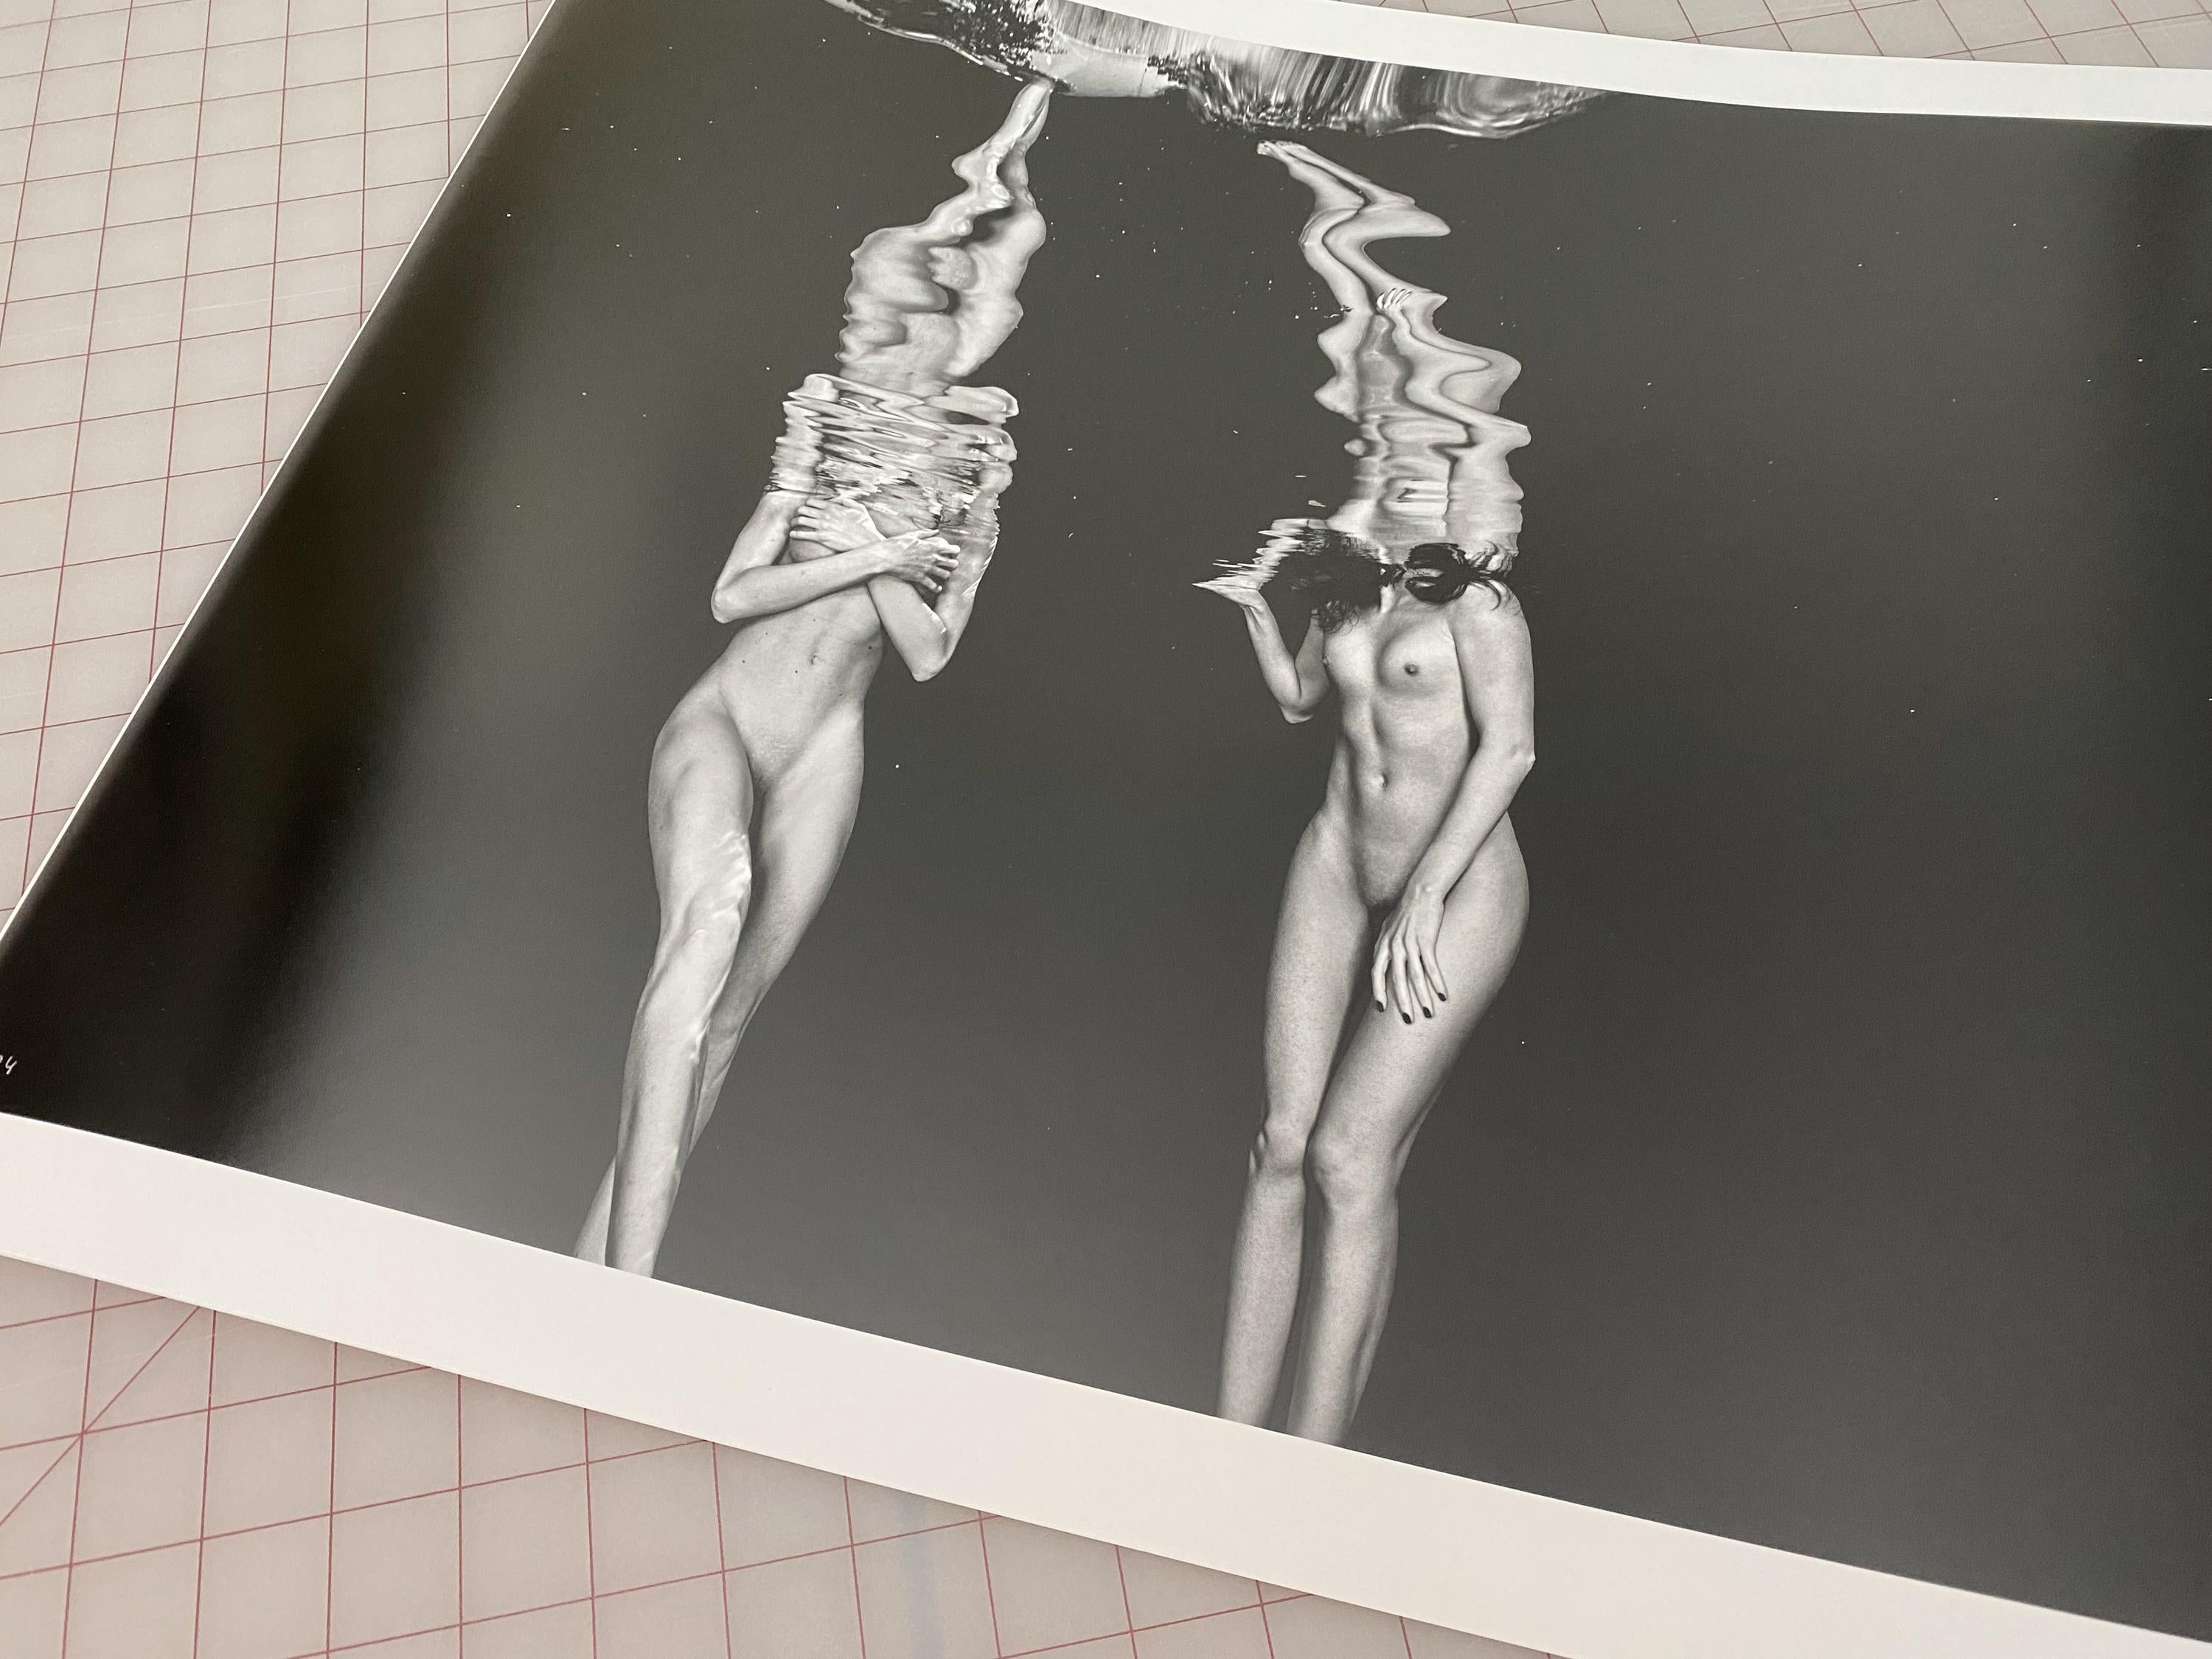 Small Talk - underwater black & white nude photograph - archival pigment 16x24